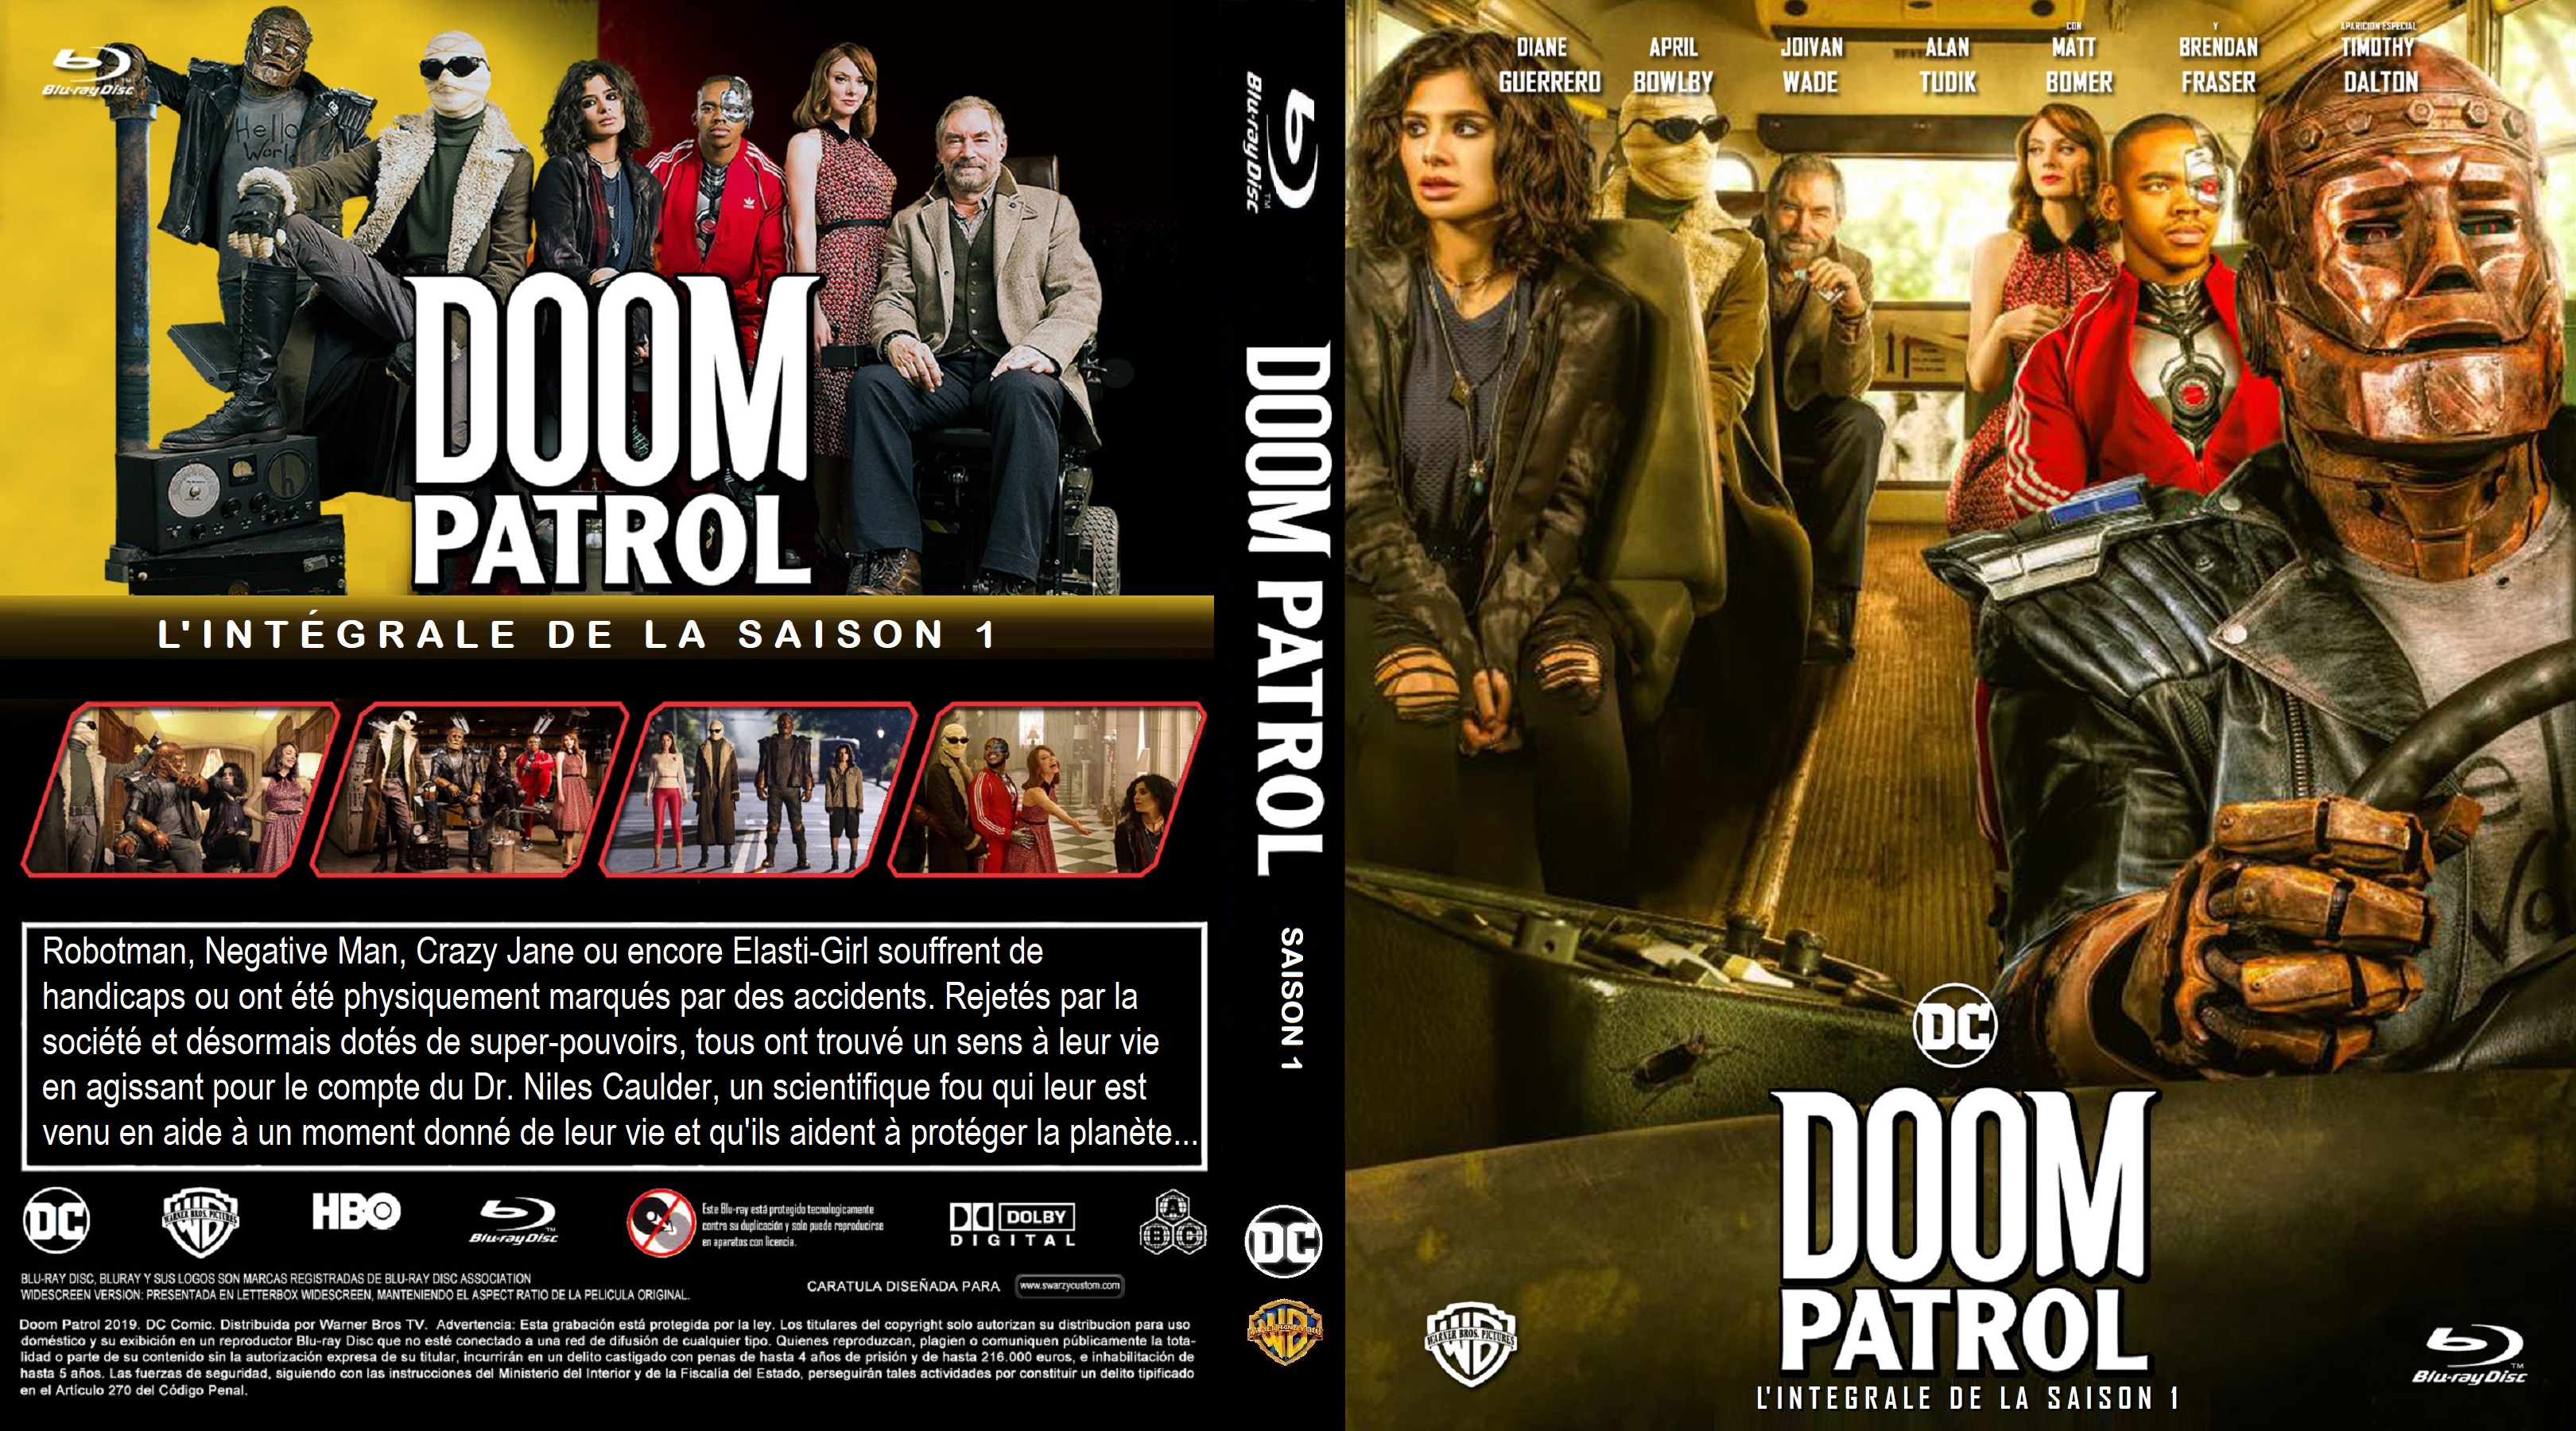 Jaquette DVD Doom Patrol saison 1 custom (BLU-RAY)